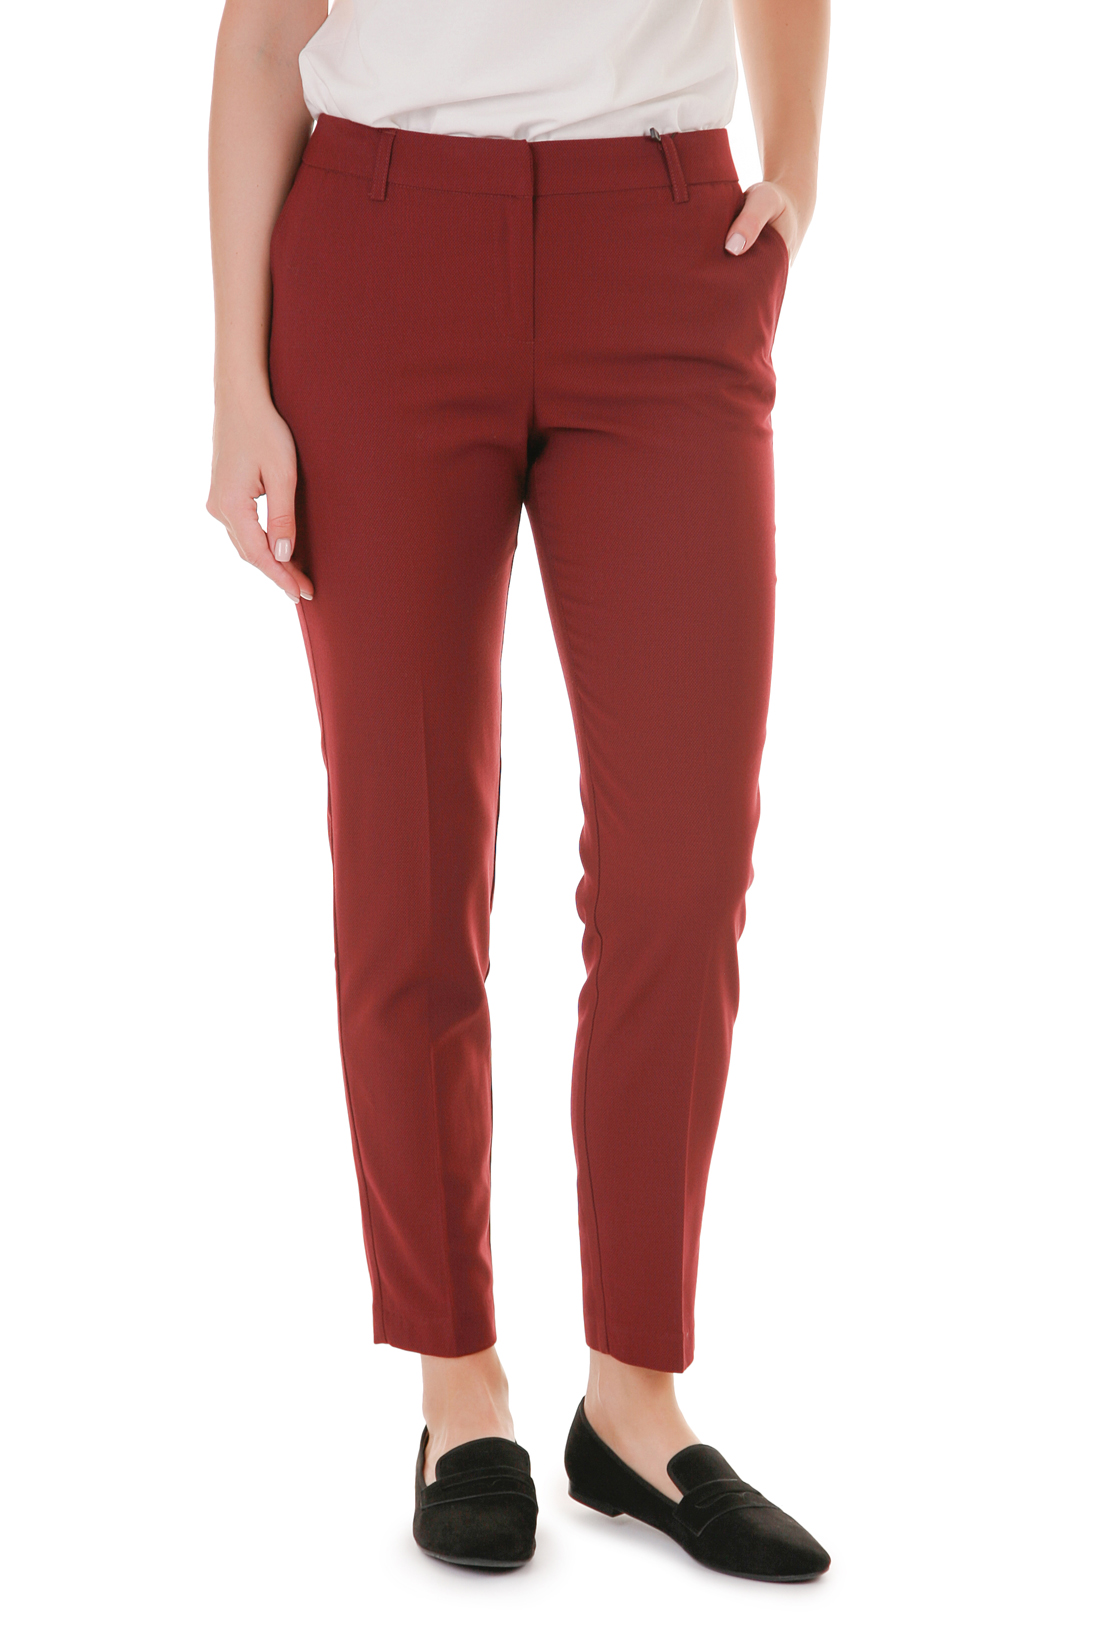 Костюмные брюки-дудочки (арт. baon B298501), размер S, цвет красный Костюмные брюки-дудочки (арт. baon B298501) - фото 1